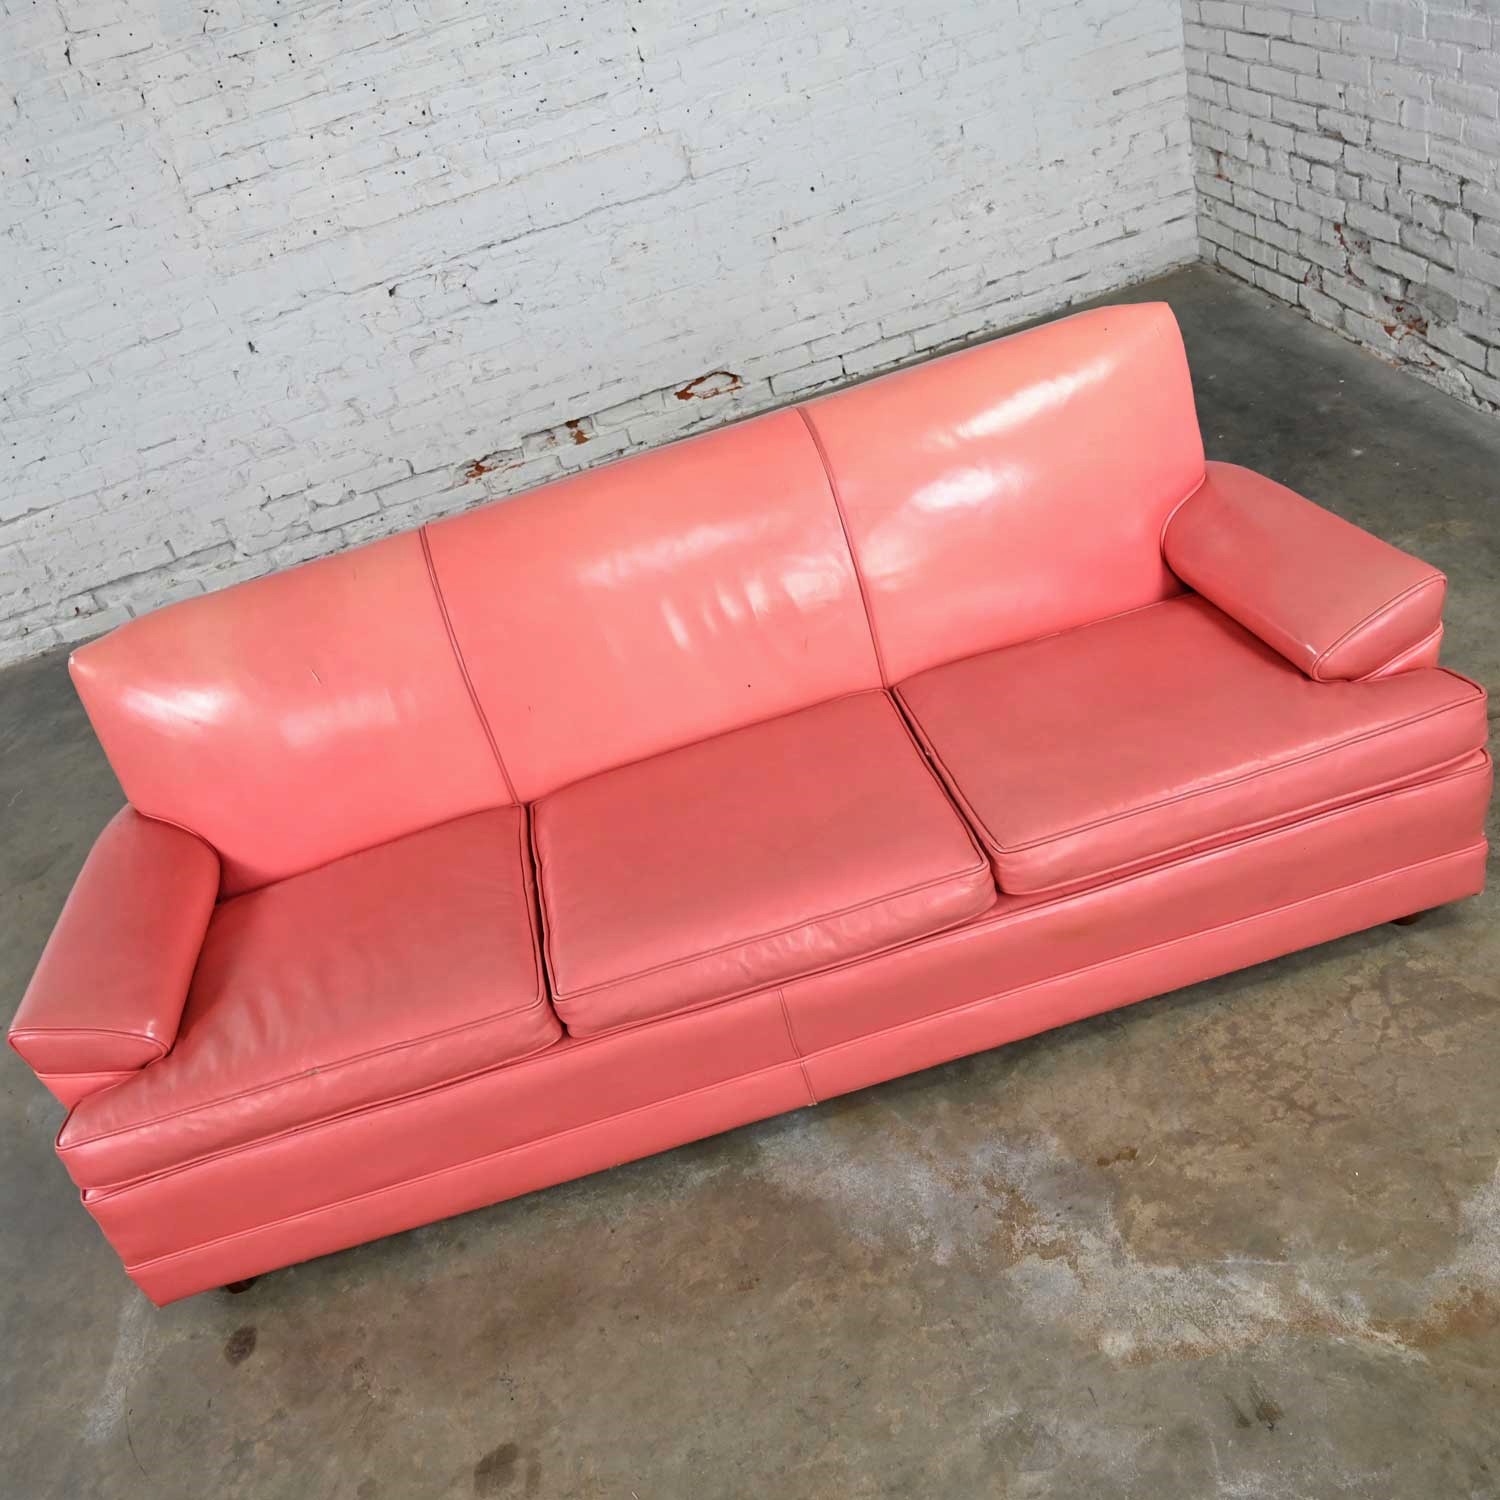 Vintage Hollywood Regency Art Deco Sofa with Original Pink Distressed Leather